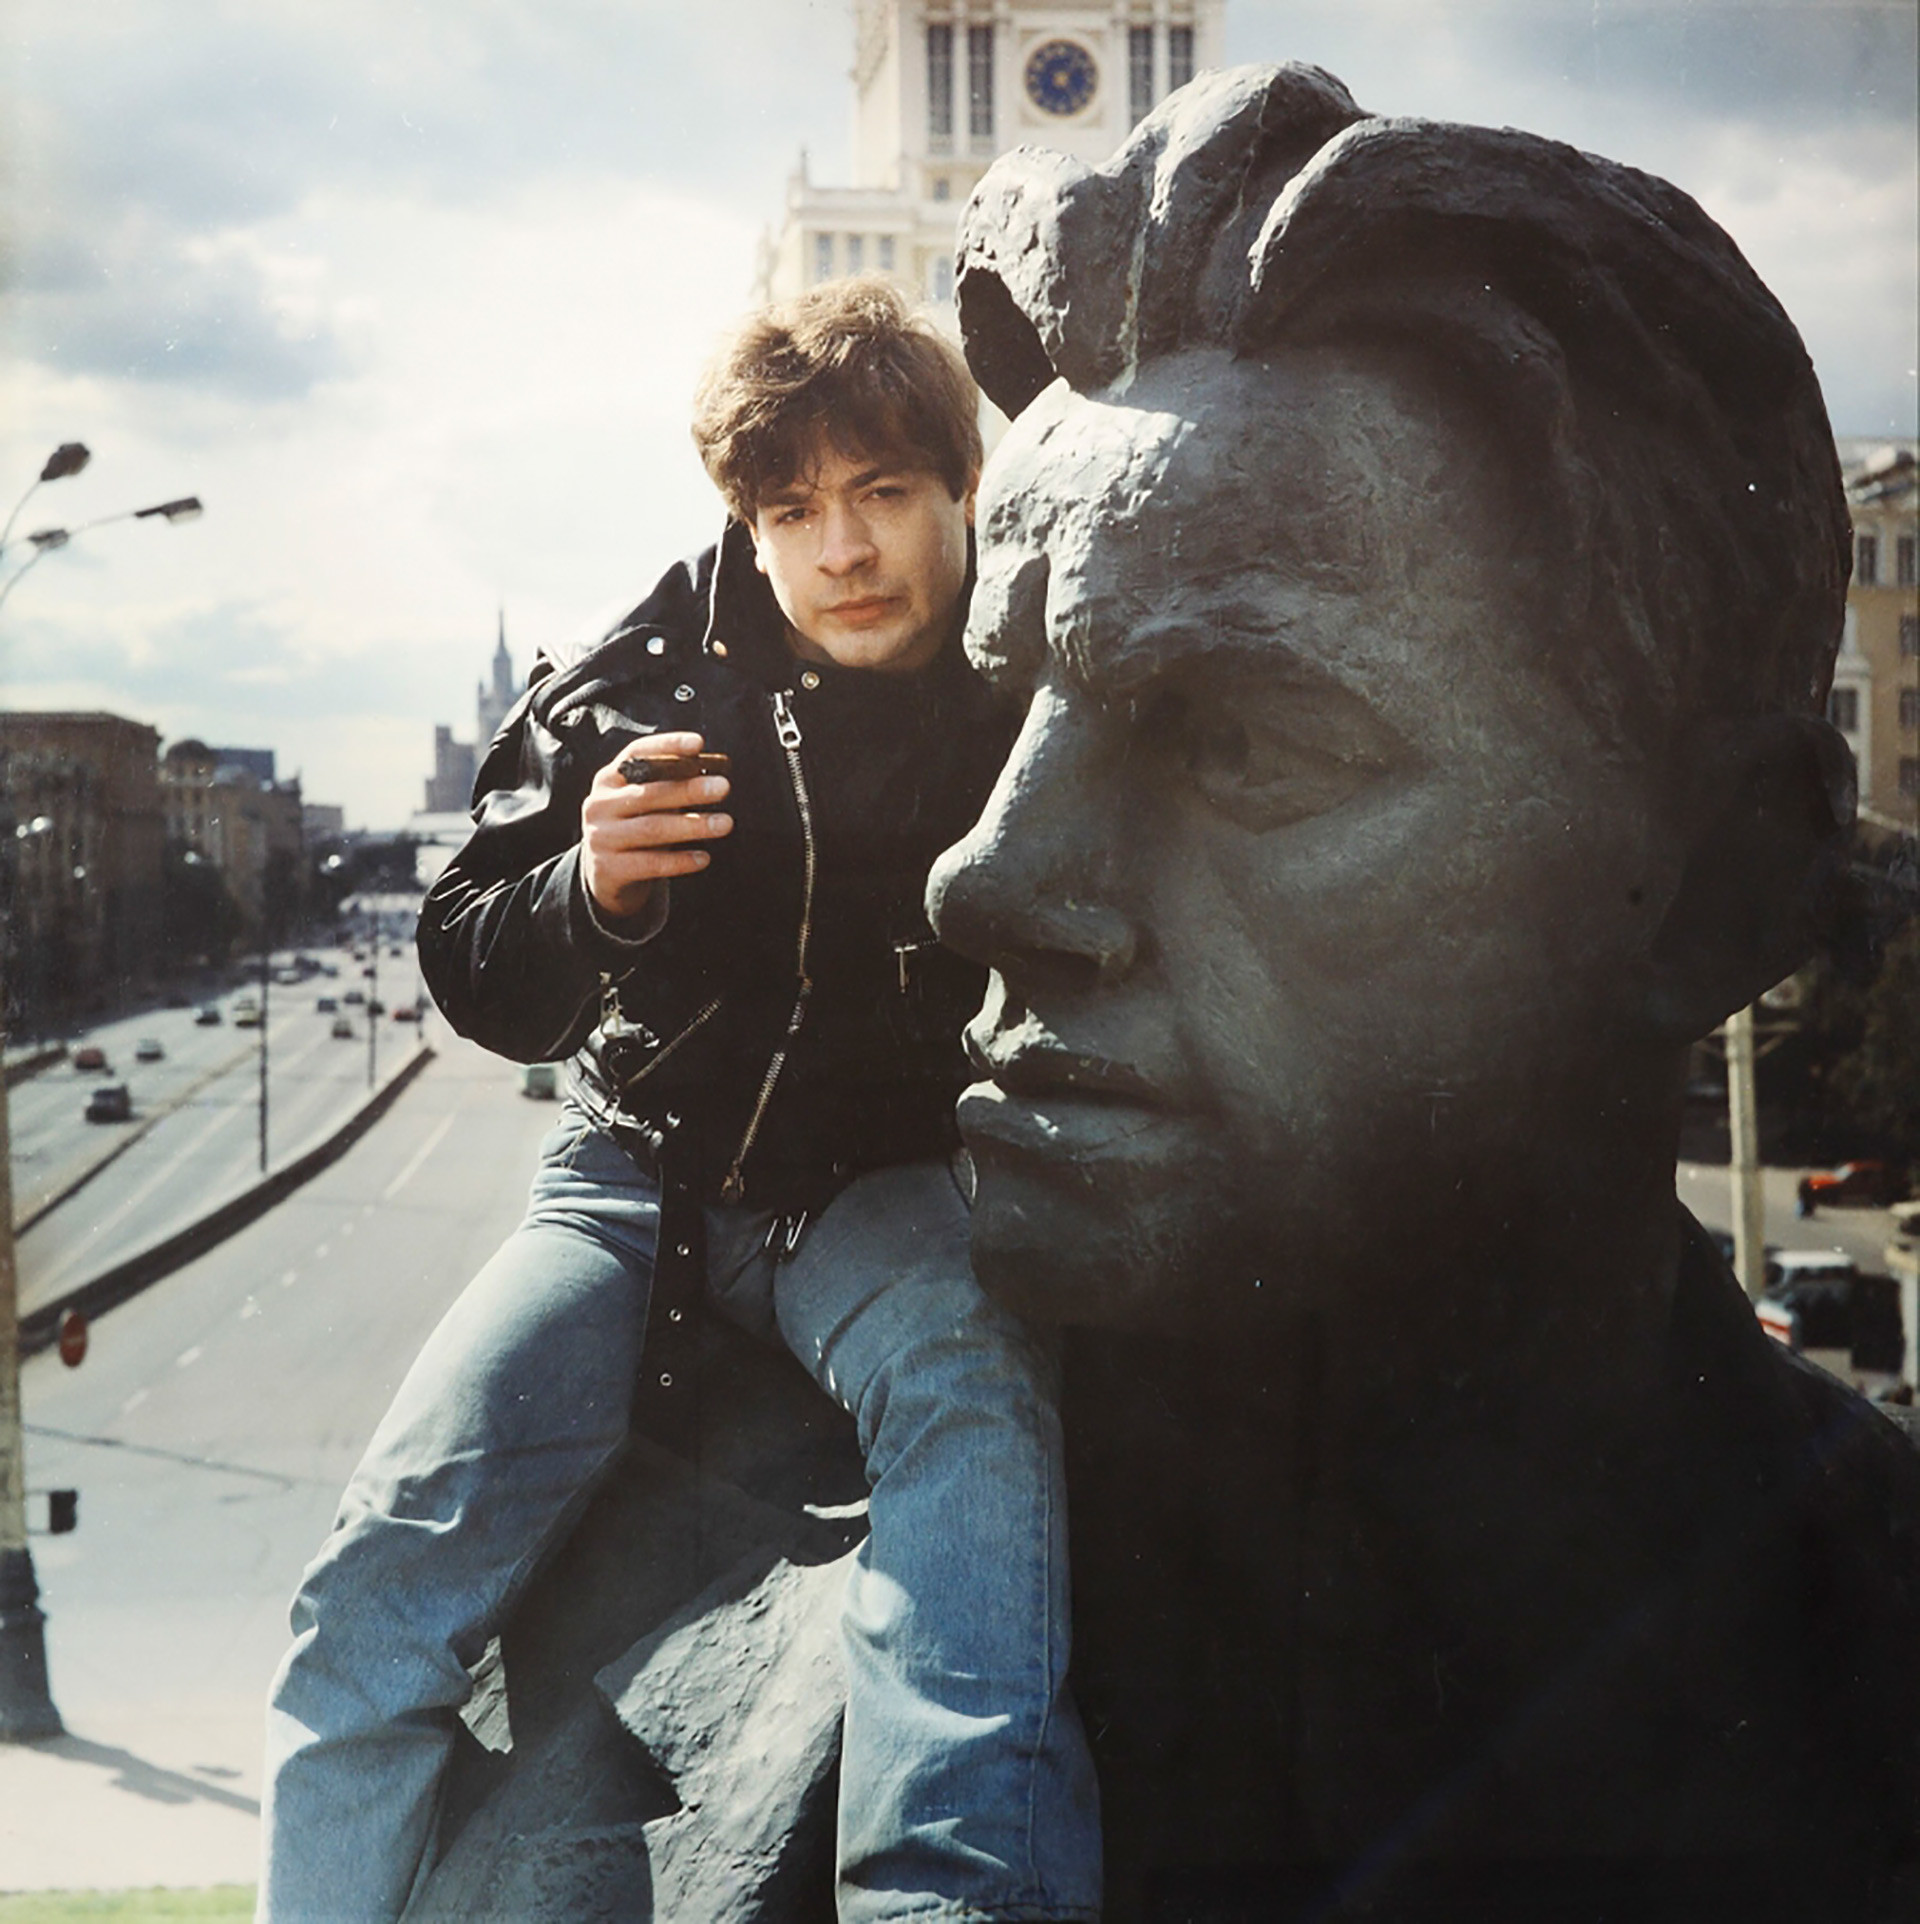 Anatolij Osmolovskij seduto sul monumento del poeta Vladimir Majakovsksij a Mosca, durante la performance “Journey of Necesiudik in the land of Brobdingnegs”, del 1993